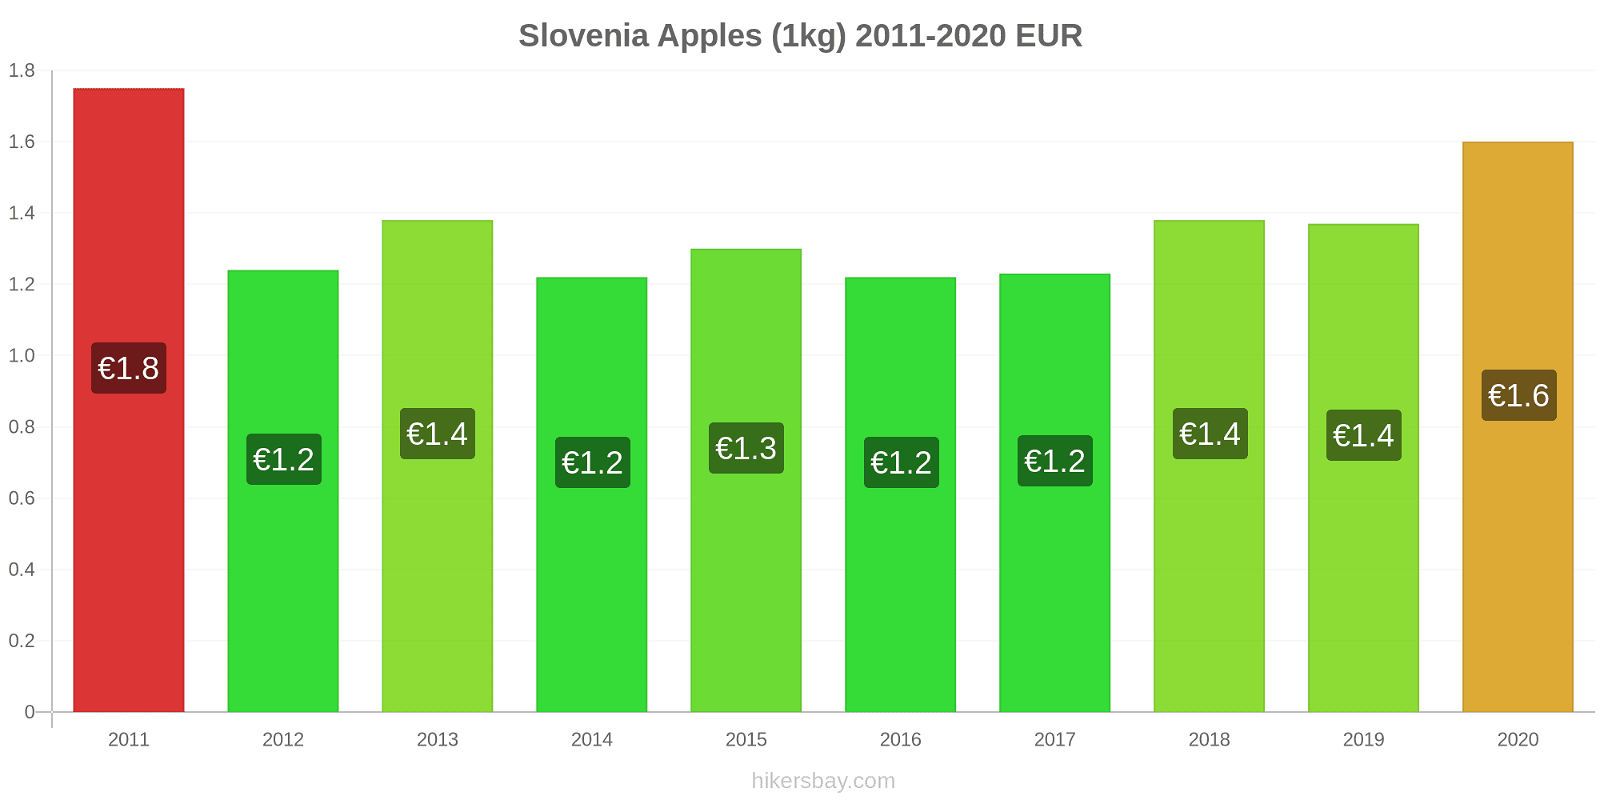 Slovenia price changes Apples (1kg) hikersbay.com